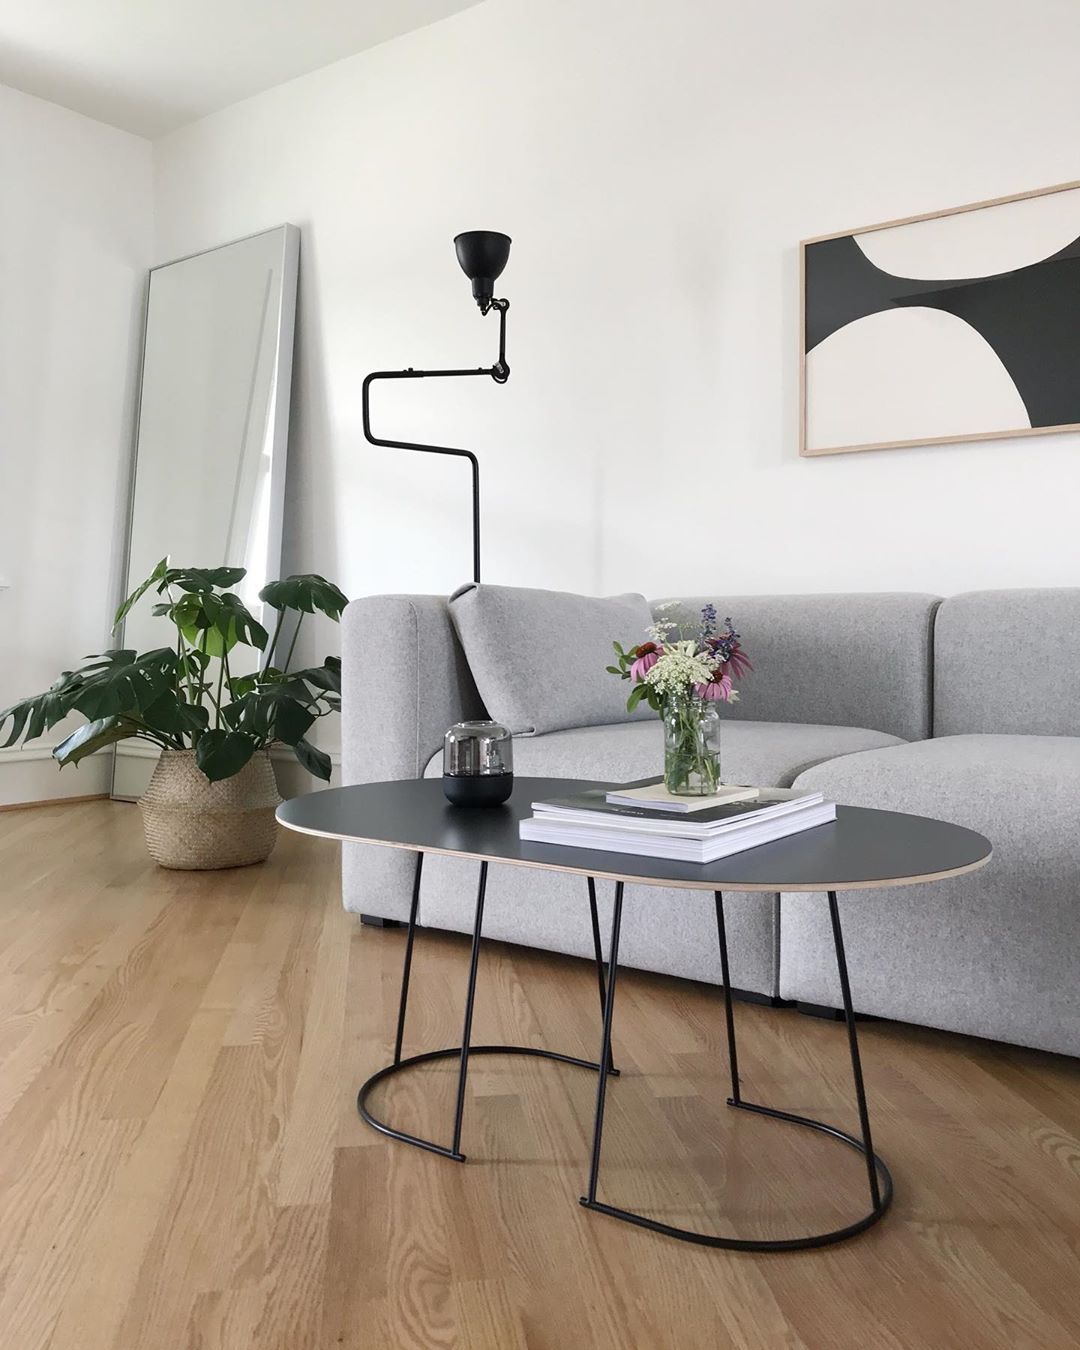 Minimalist Living Room with Abstract Wall Art via @minima_organizing